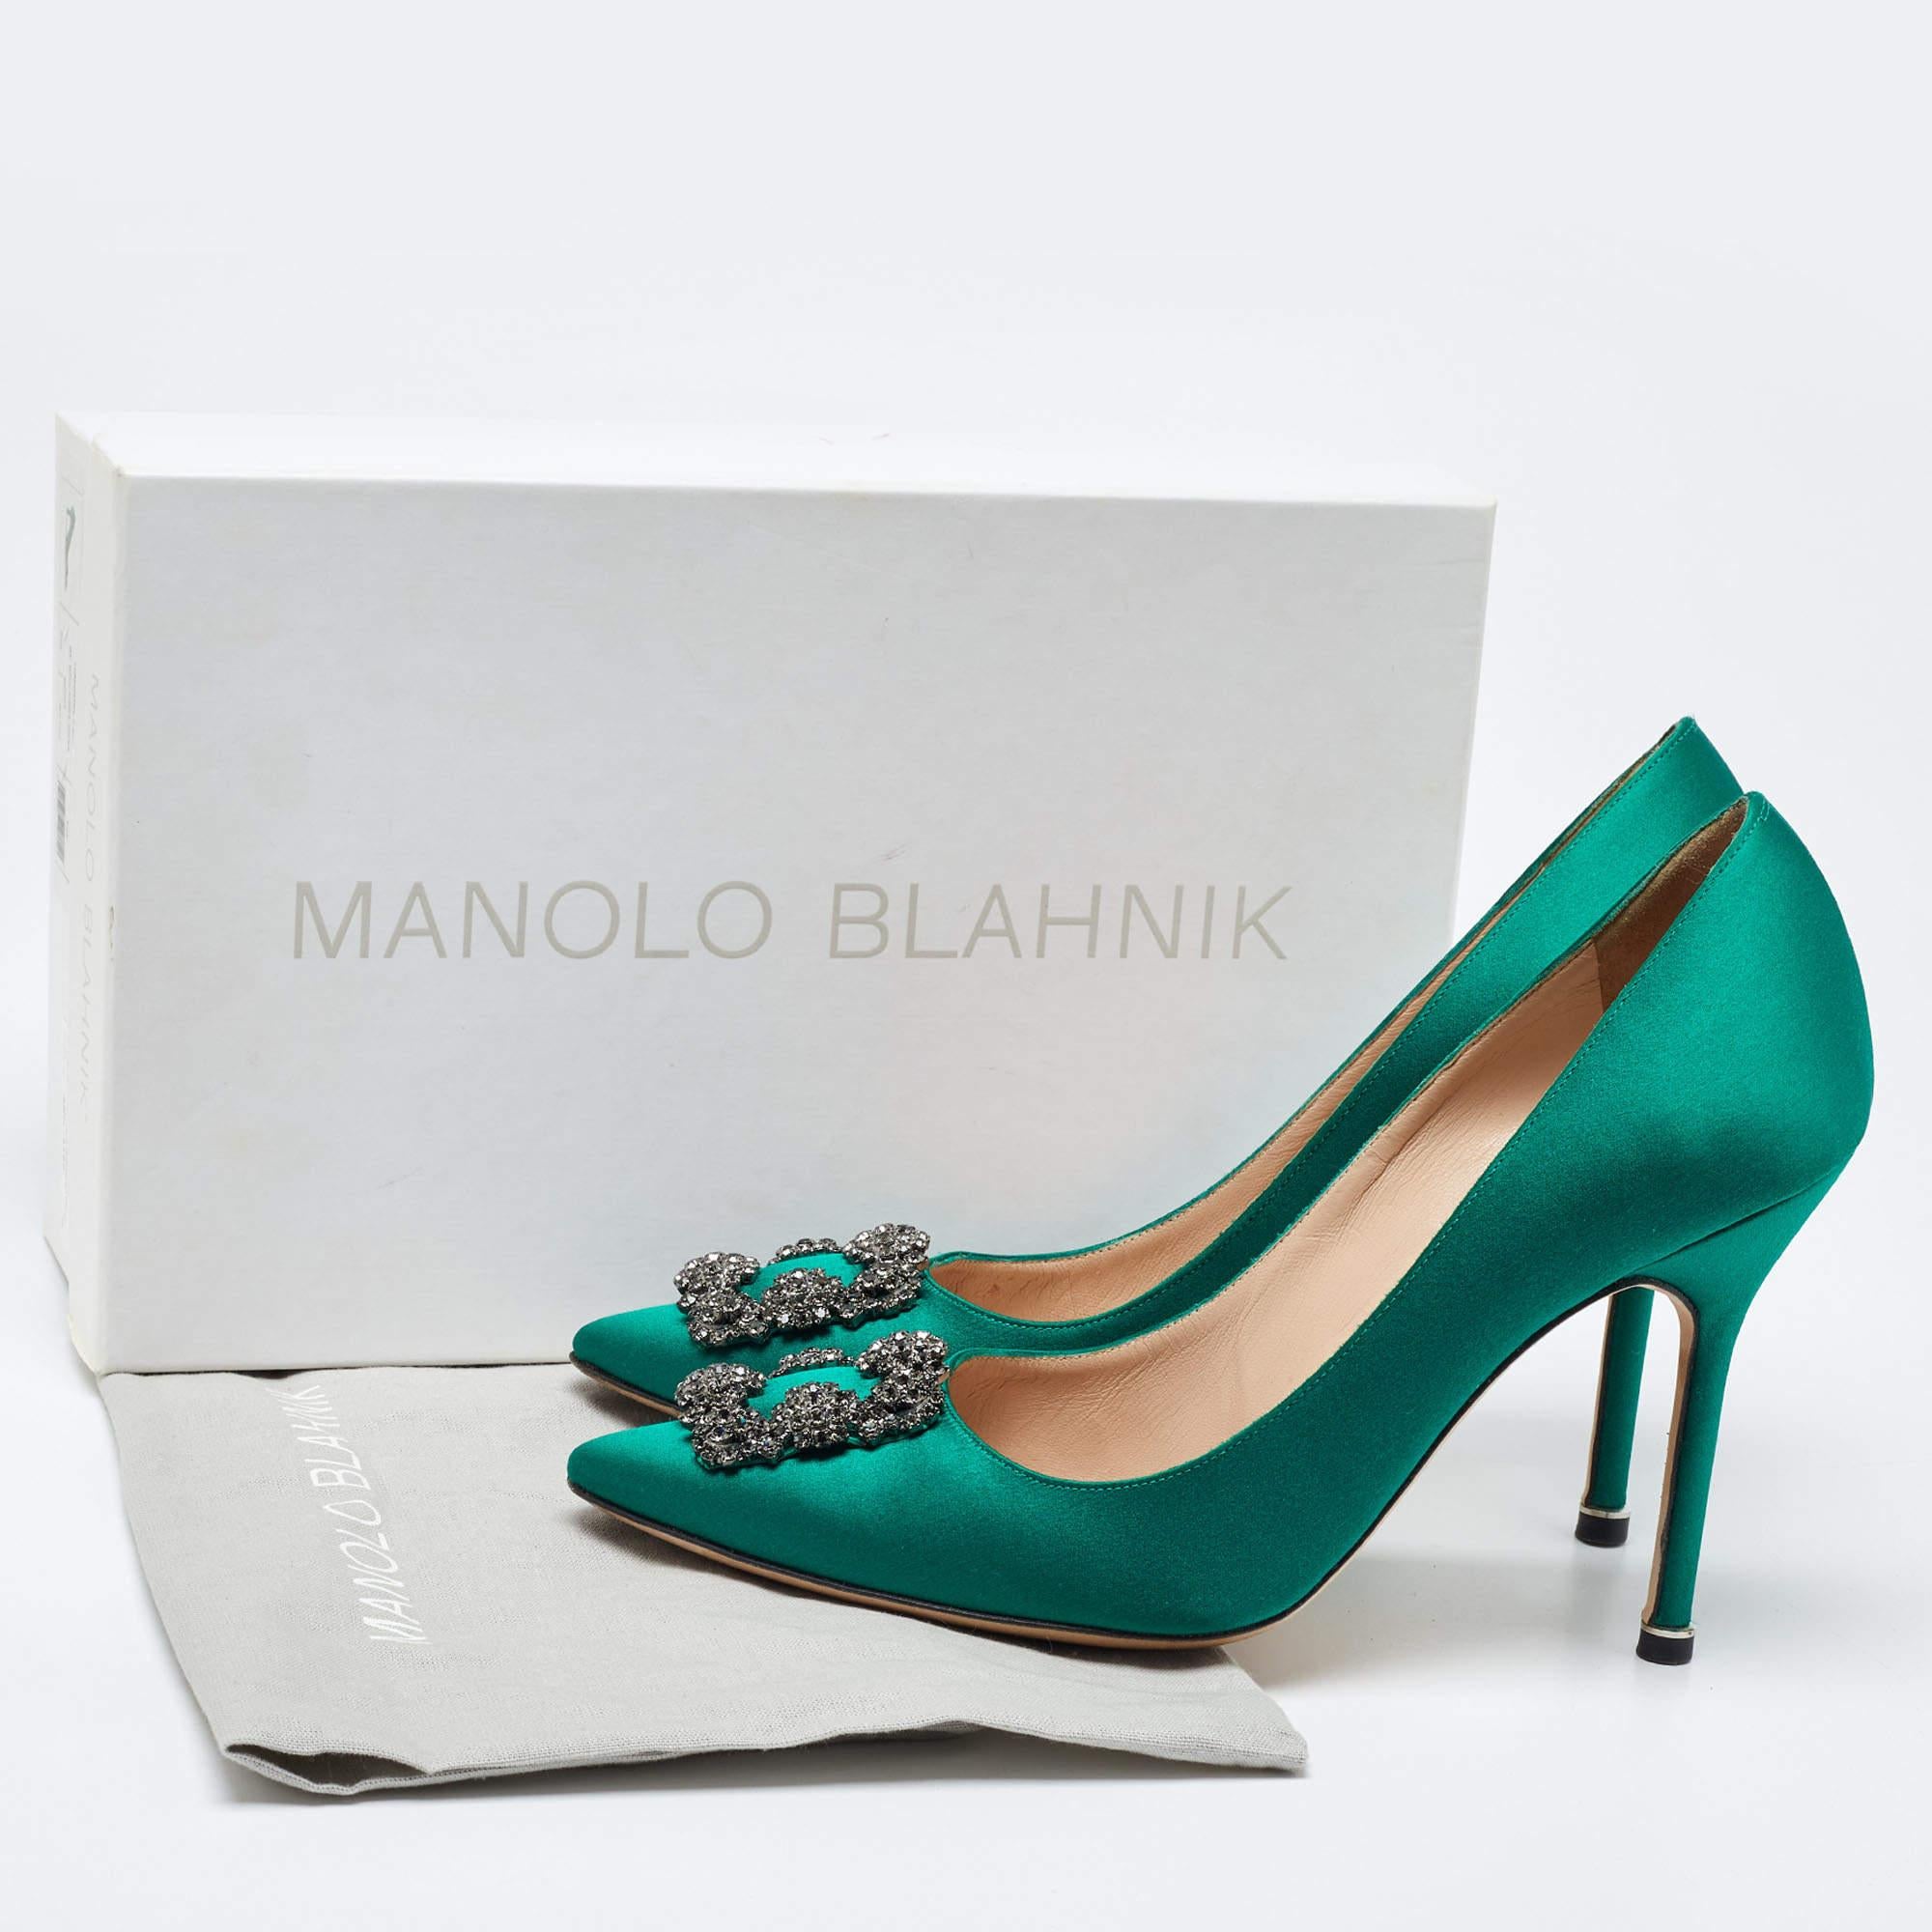 Manolo Blahnik Green Satin Hangisi Crystal Embellished Pumps Size 40 5